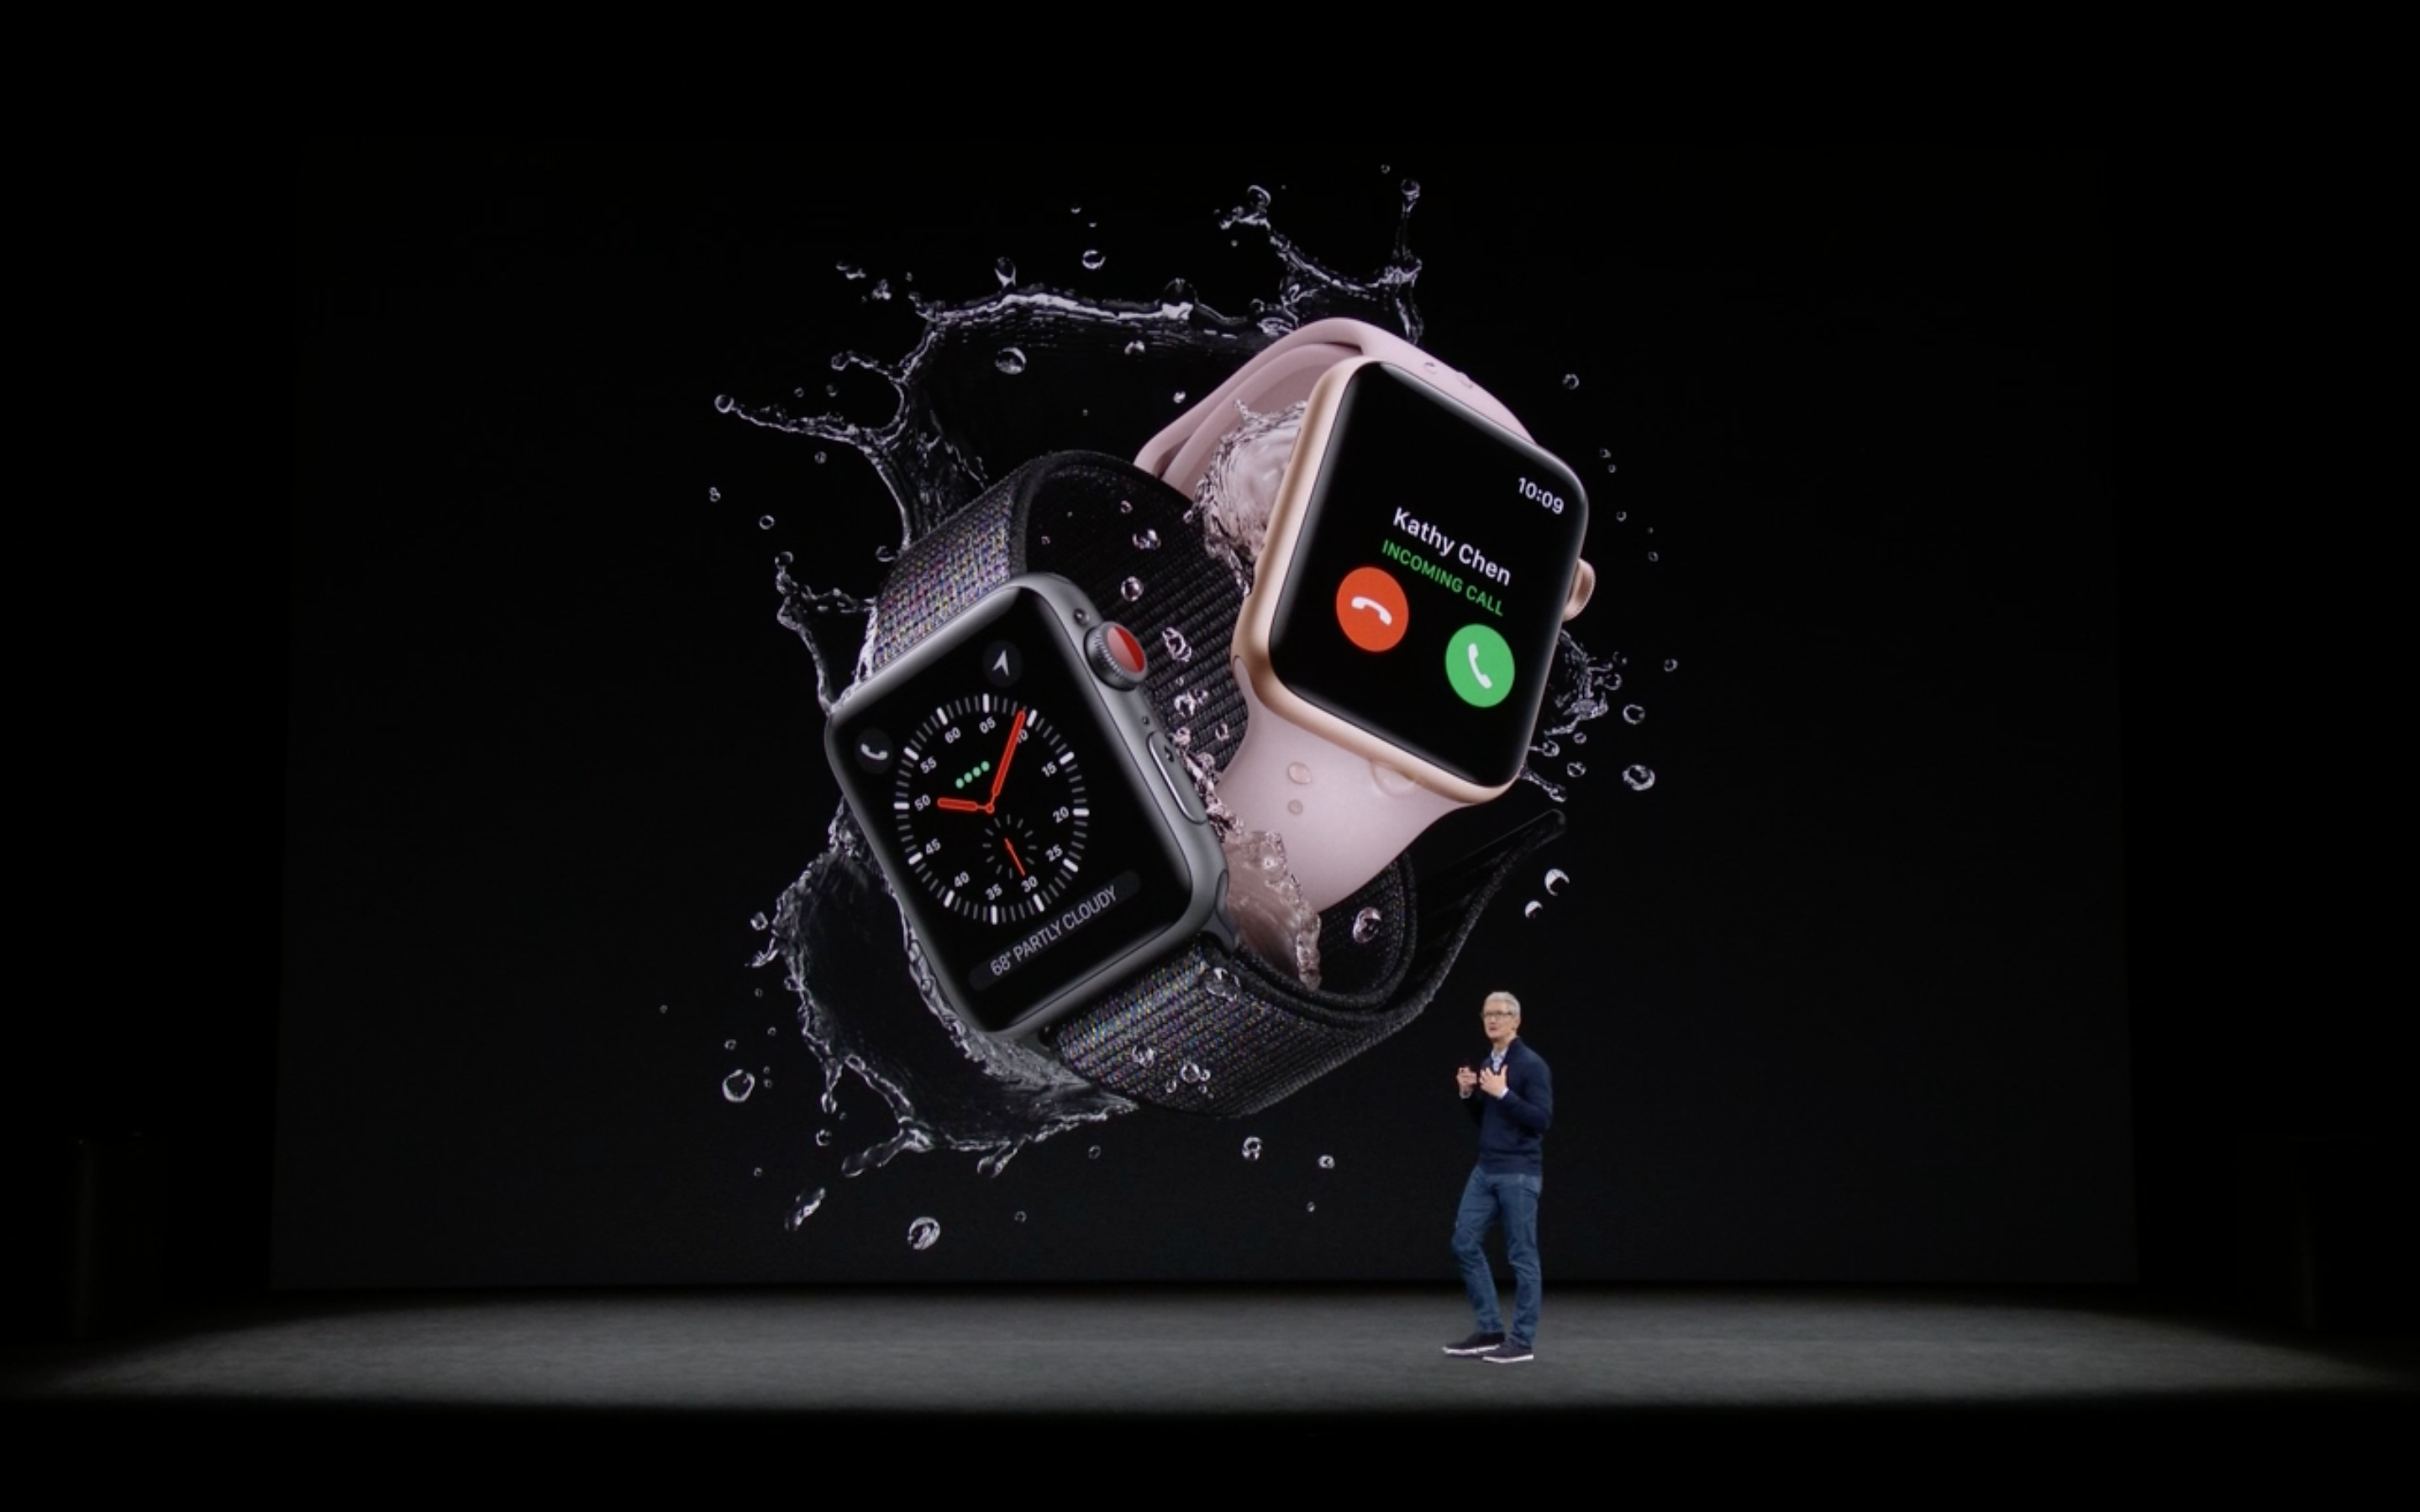 Бесплатная заставка на смарт часы. Apple watch 2017. Эппл вотч презентация. Фон для смарт часов. Заставка на часы смарт.